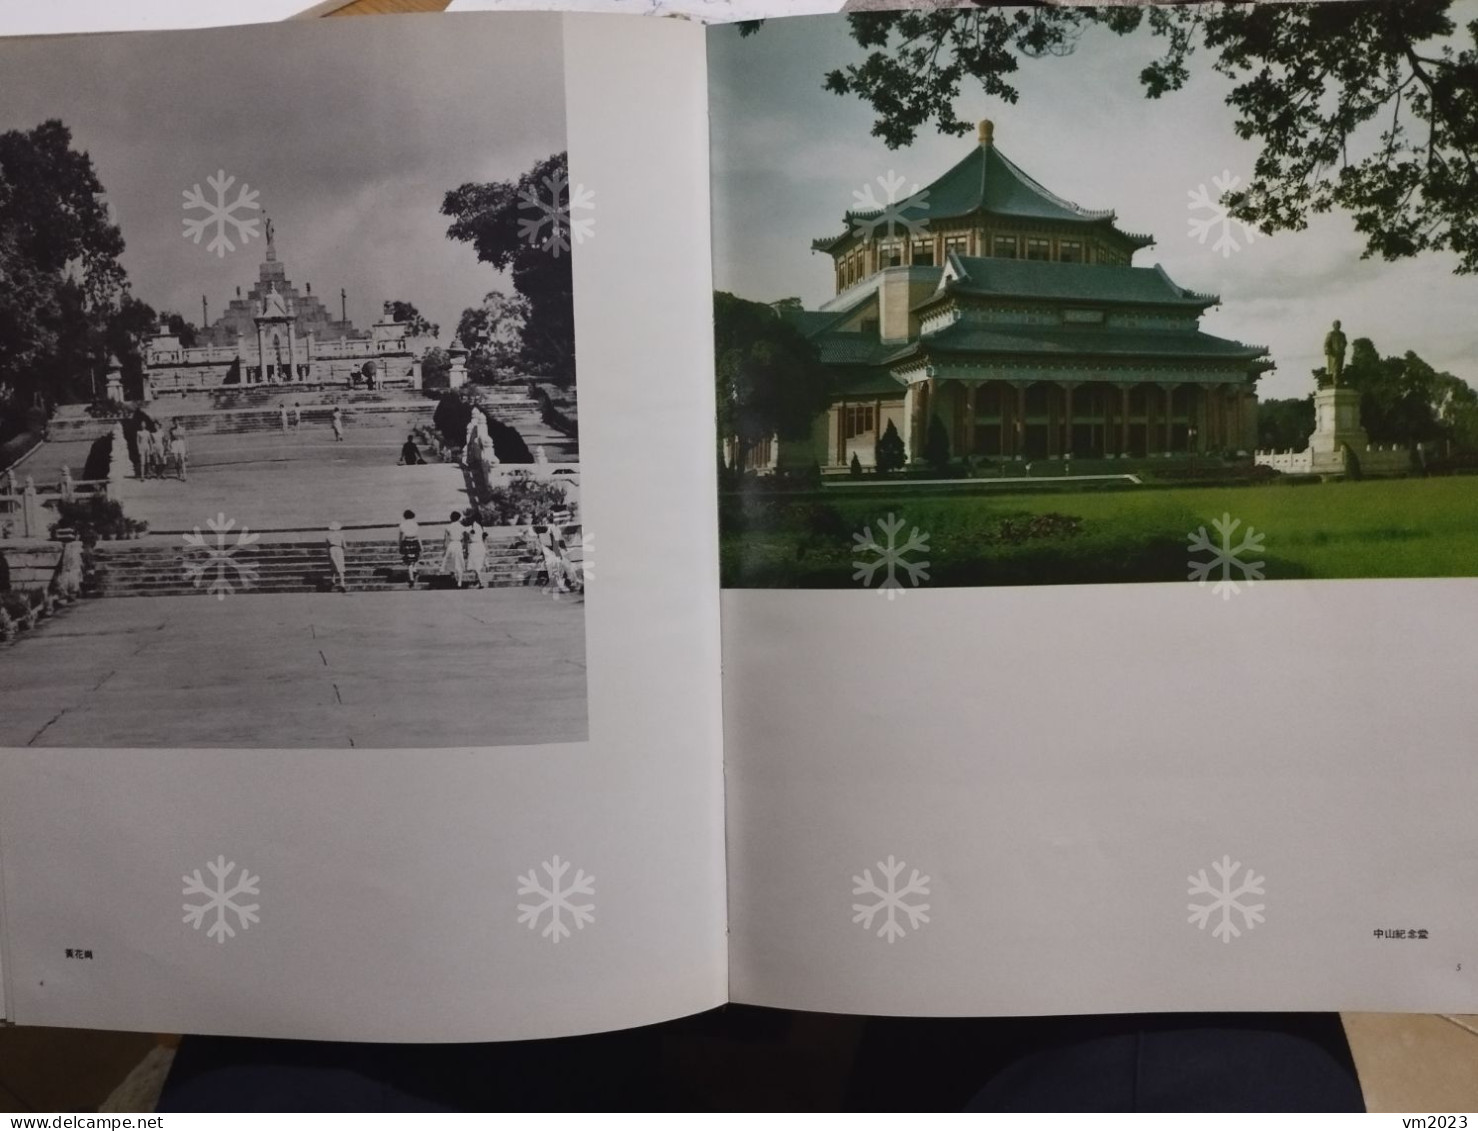 China Mao Tze Dung. Book KWANGTUNG Illustration of photo. 1949 - 1959